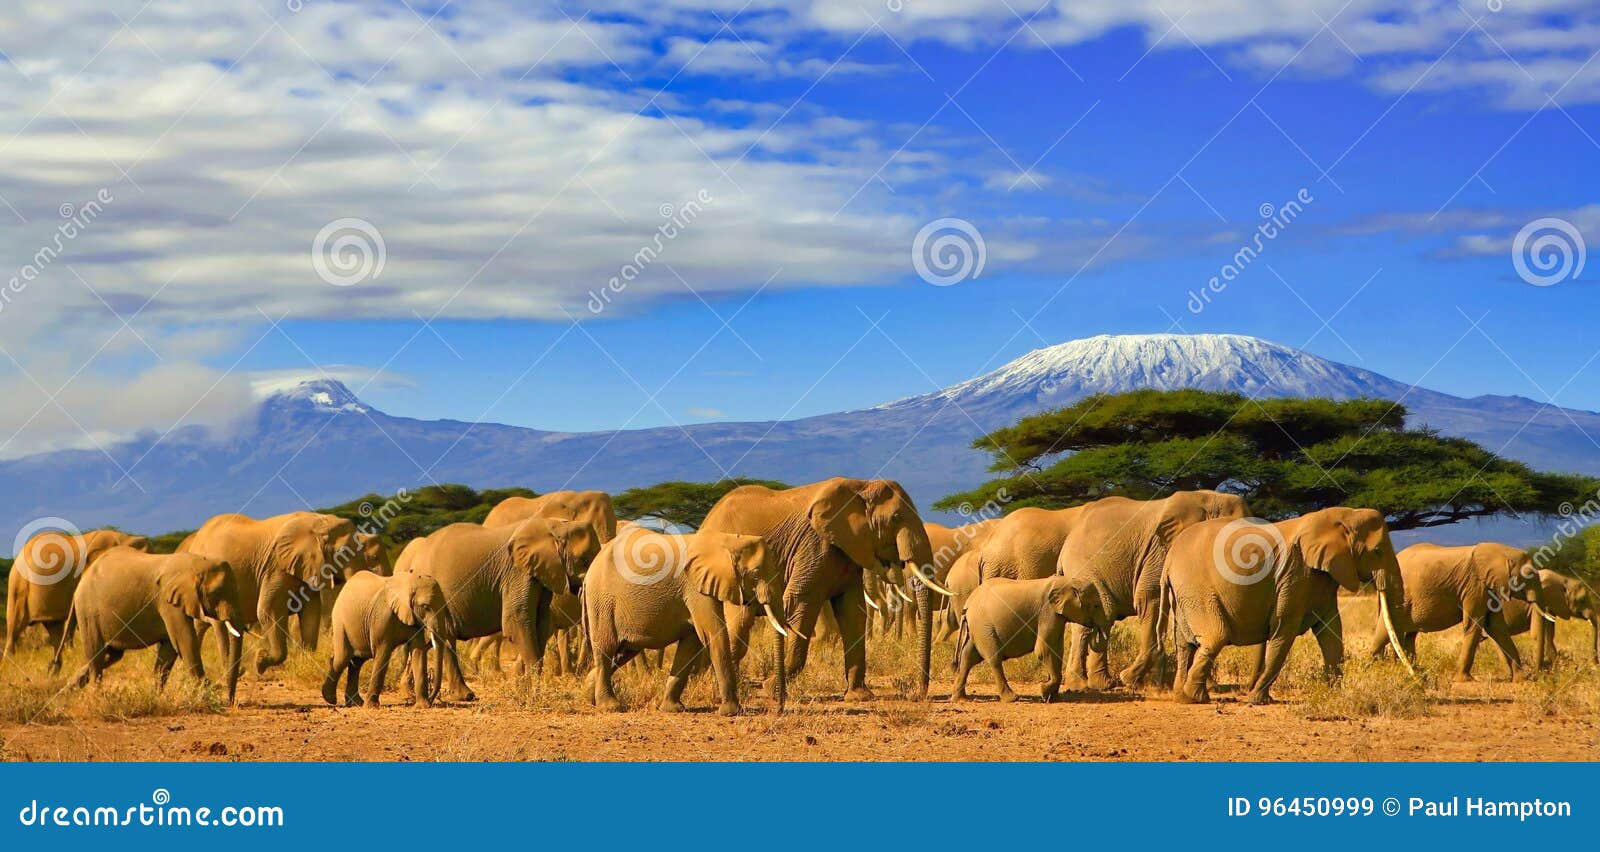 kilimanjaro tanzania african elephants safari kenya